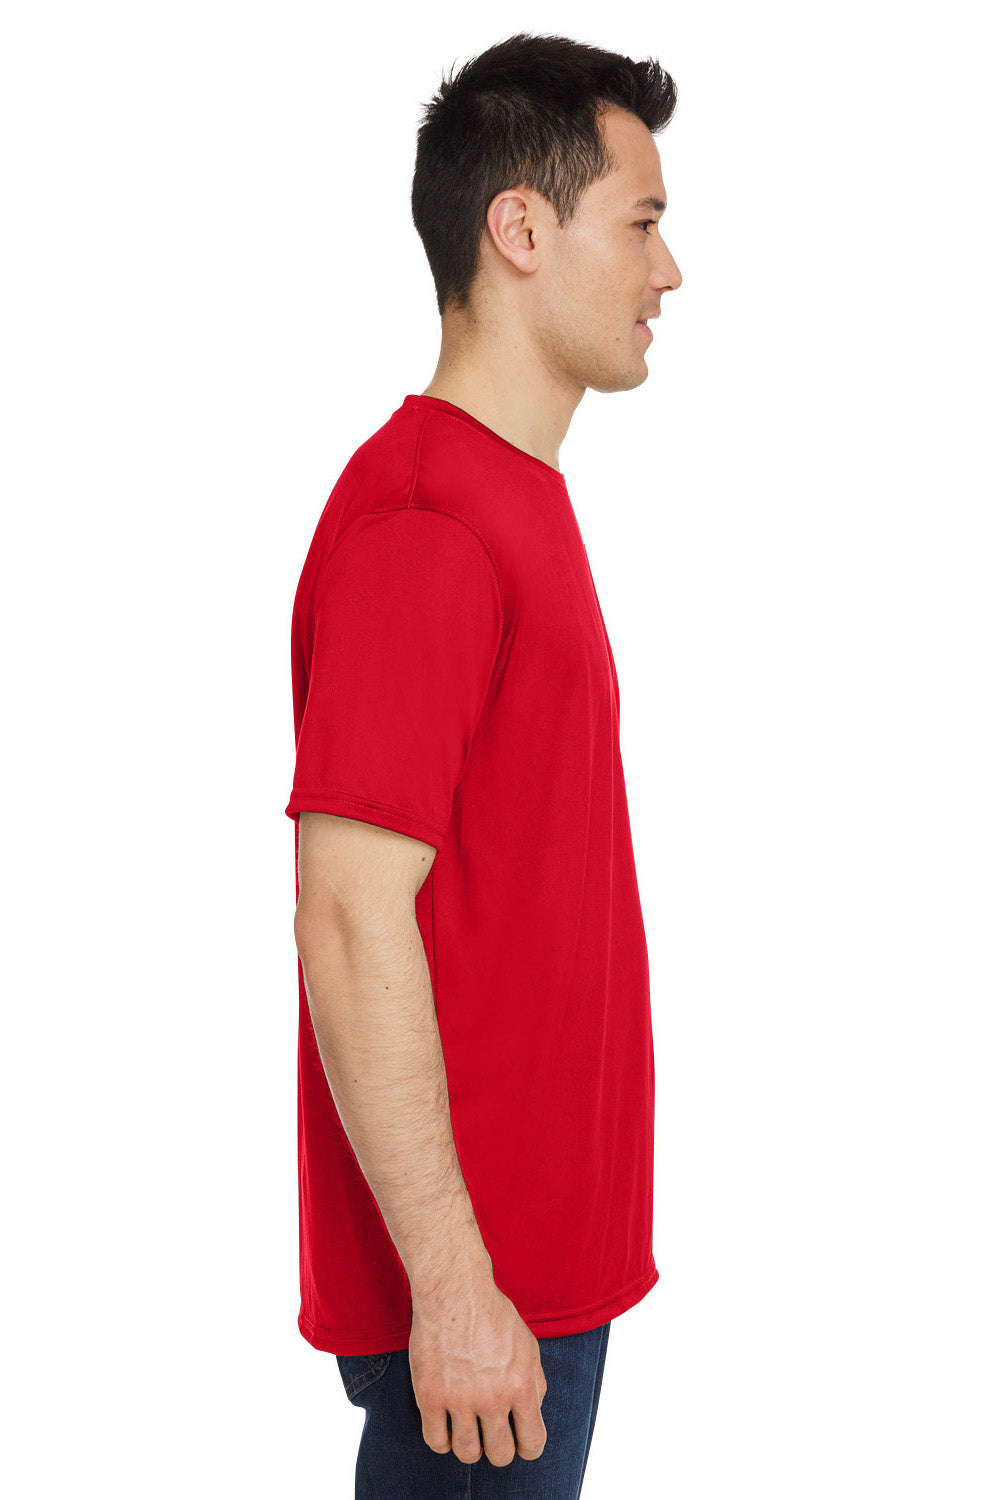 Under Armour 1376842 Mens Team Tech Moisture Wicking Short Sleeve Crewneck T-Shirt Red Model Side